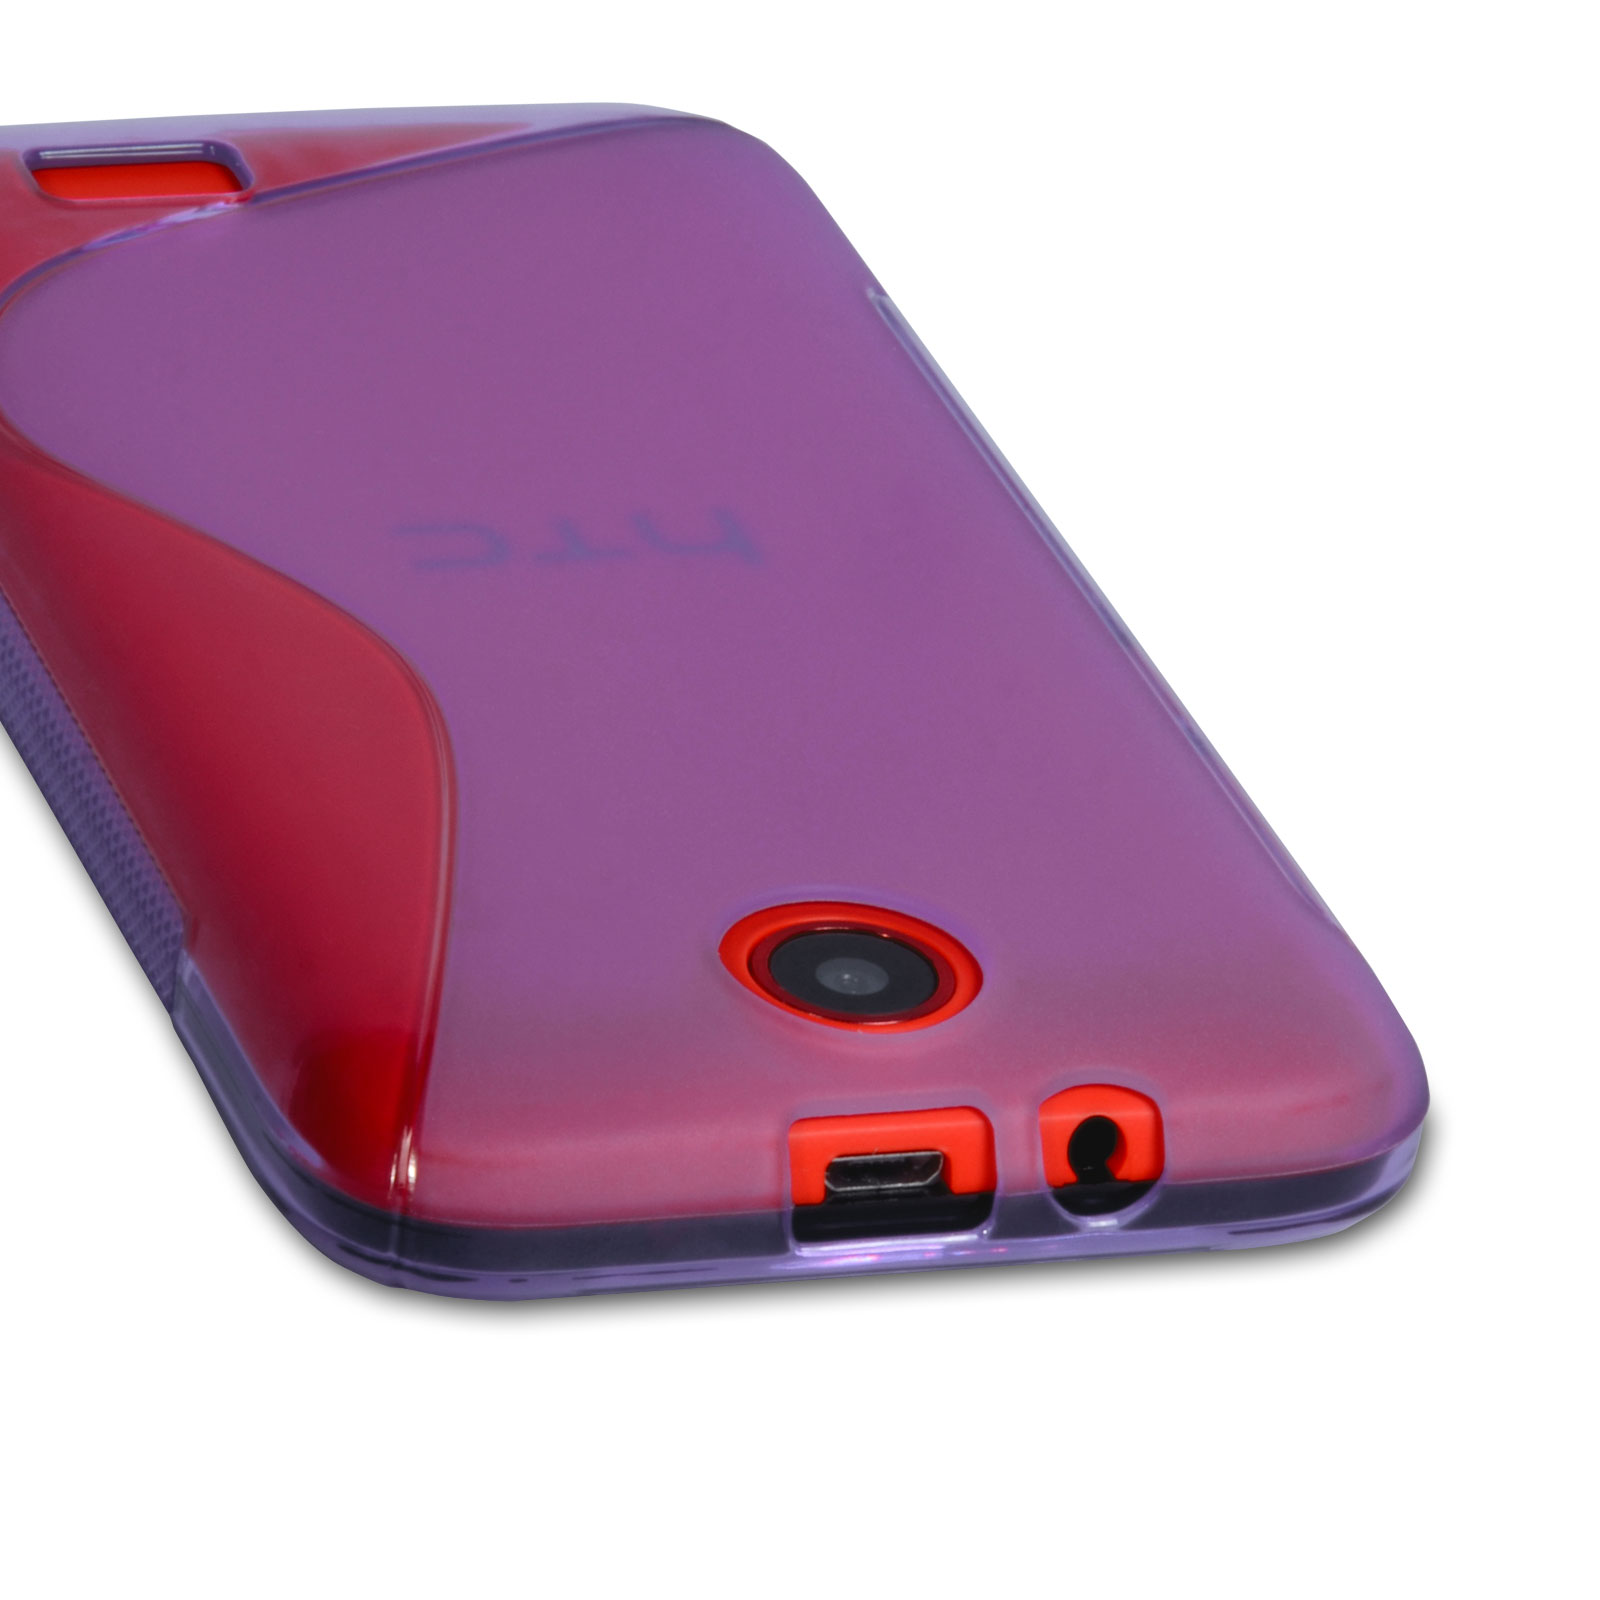 Caseflex HTC Desire 310 Silicone Gel S-Line Case - Purple